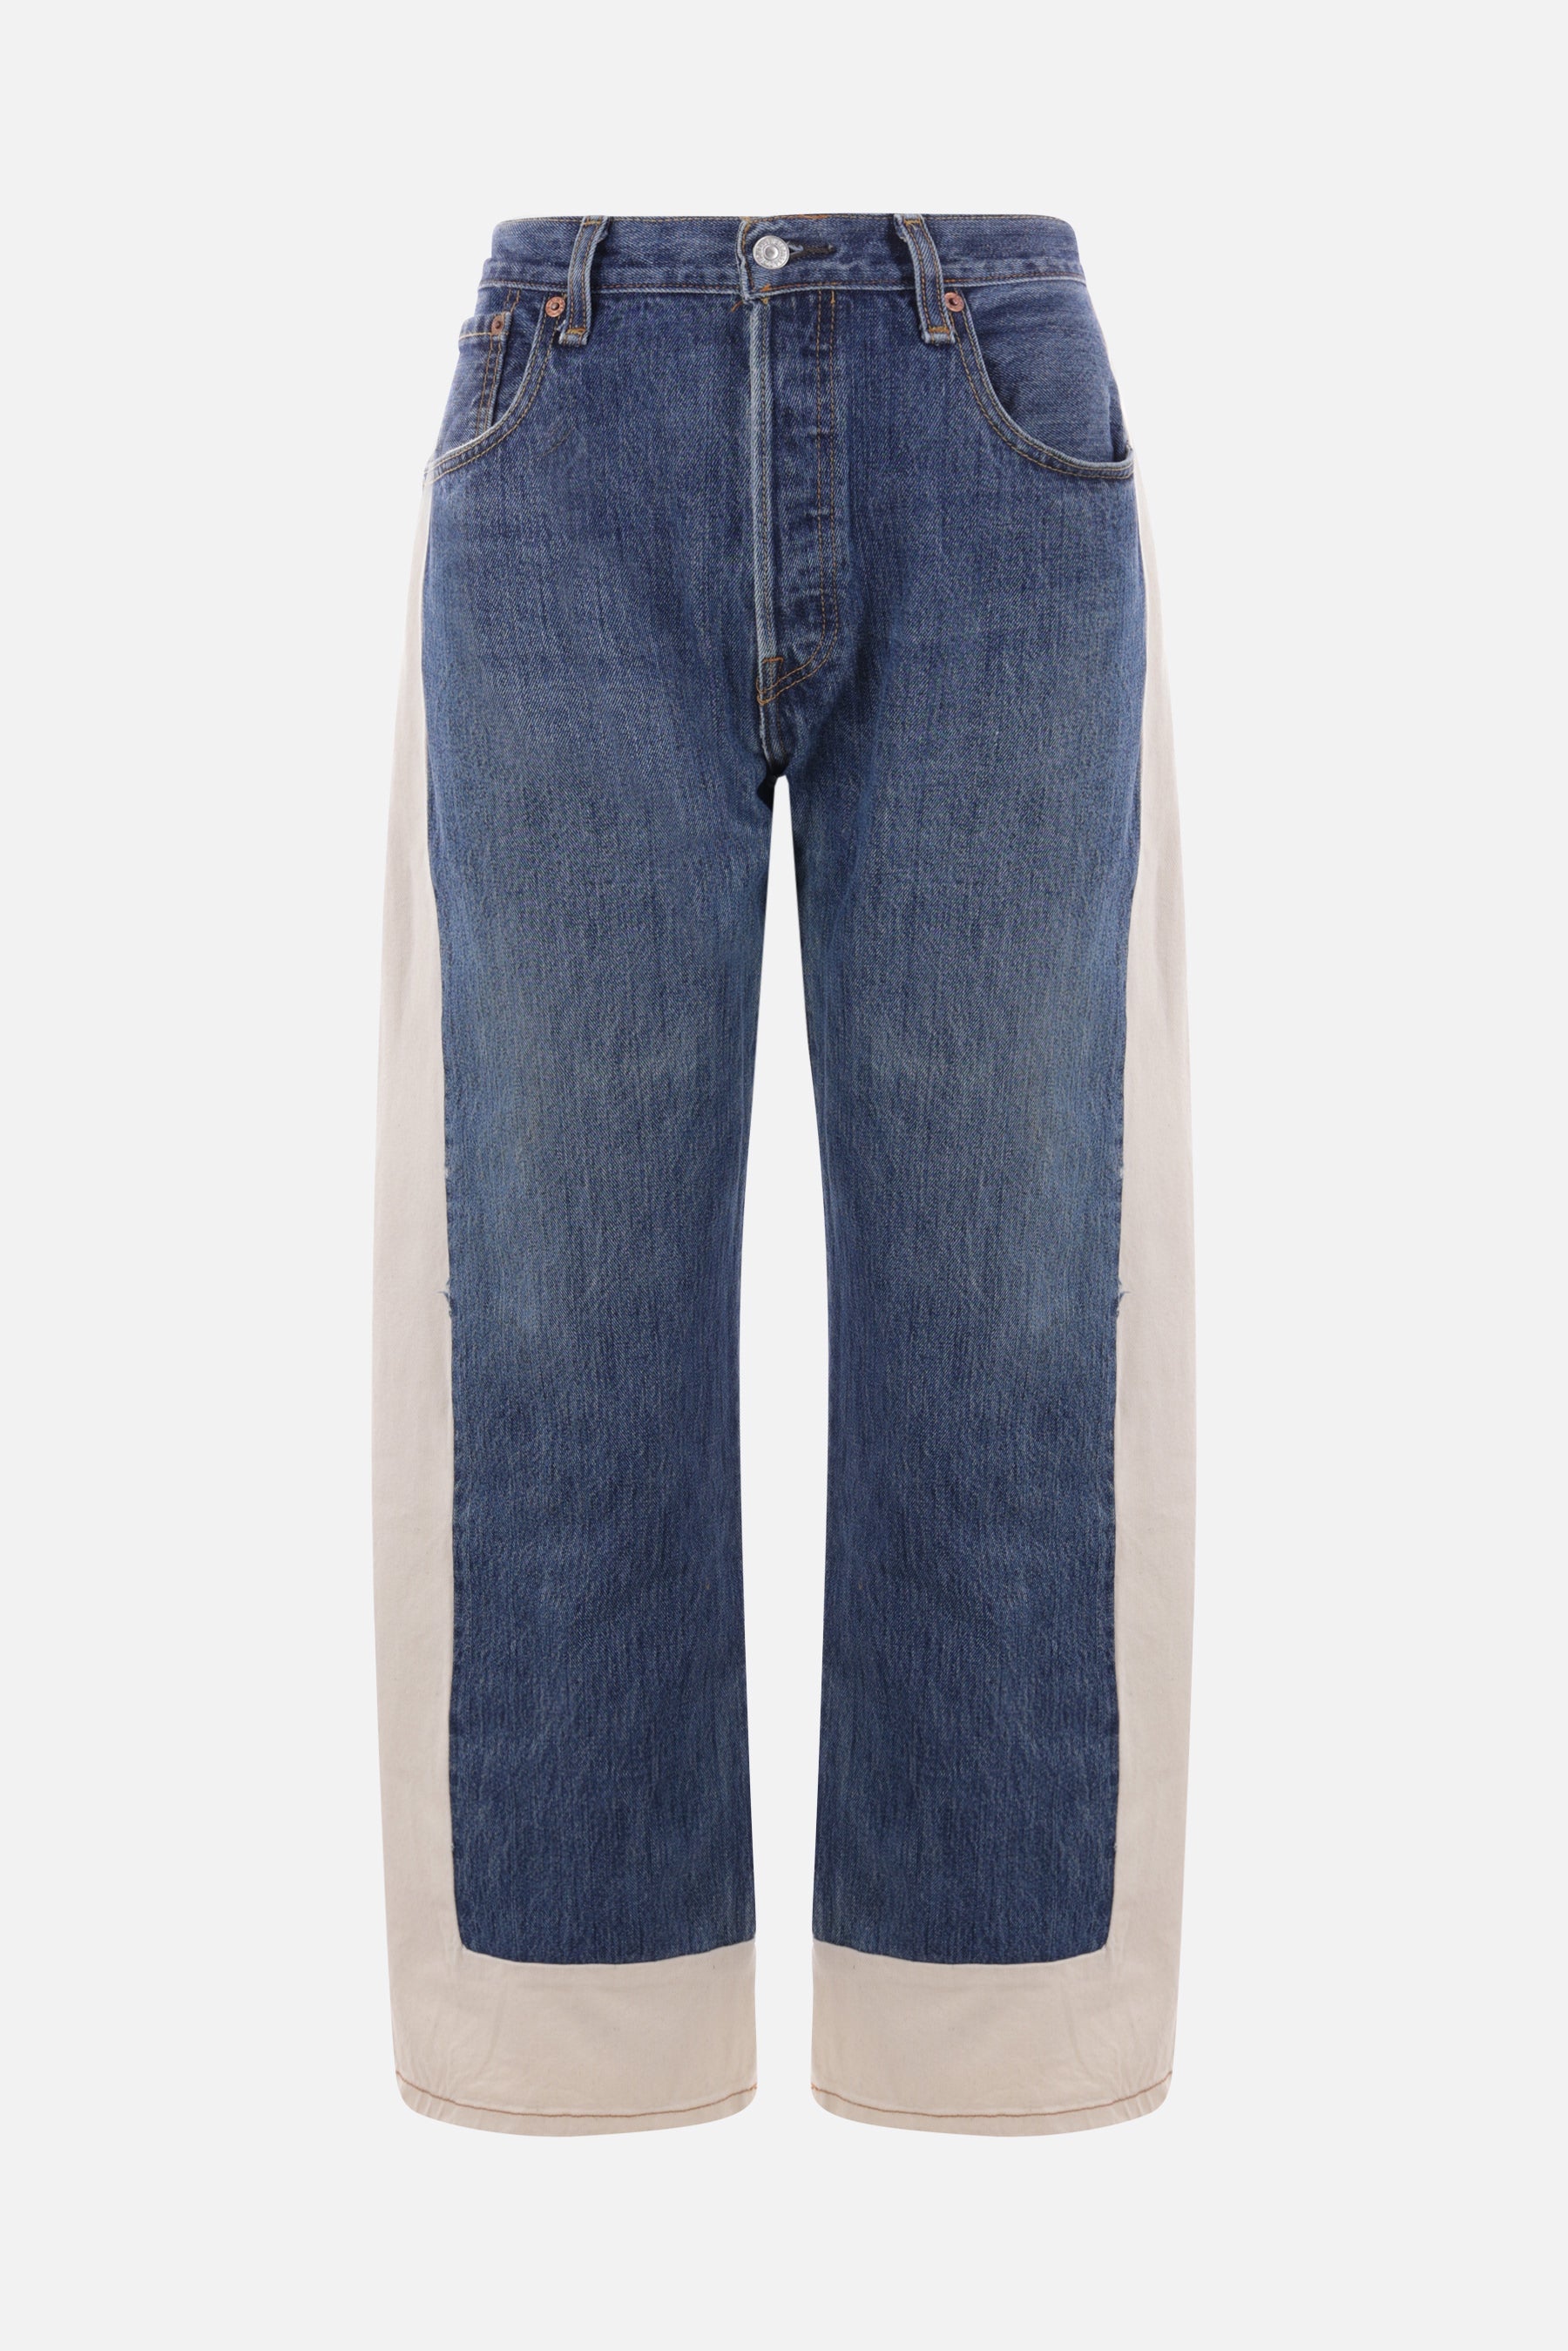 jeans cropped Reworked in denim vintage rigenerato